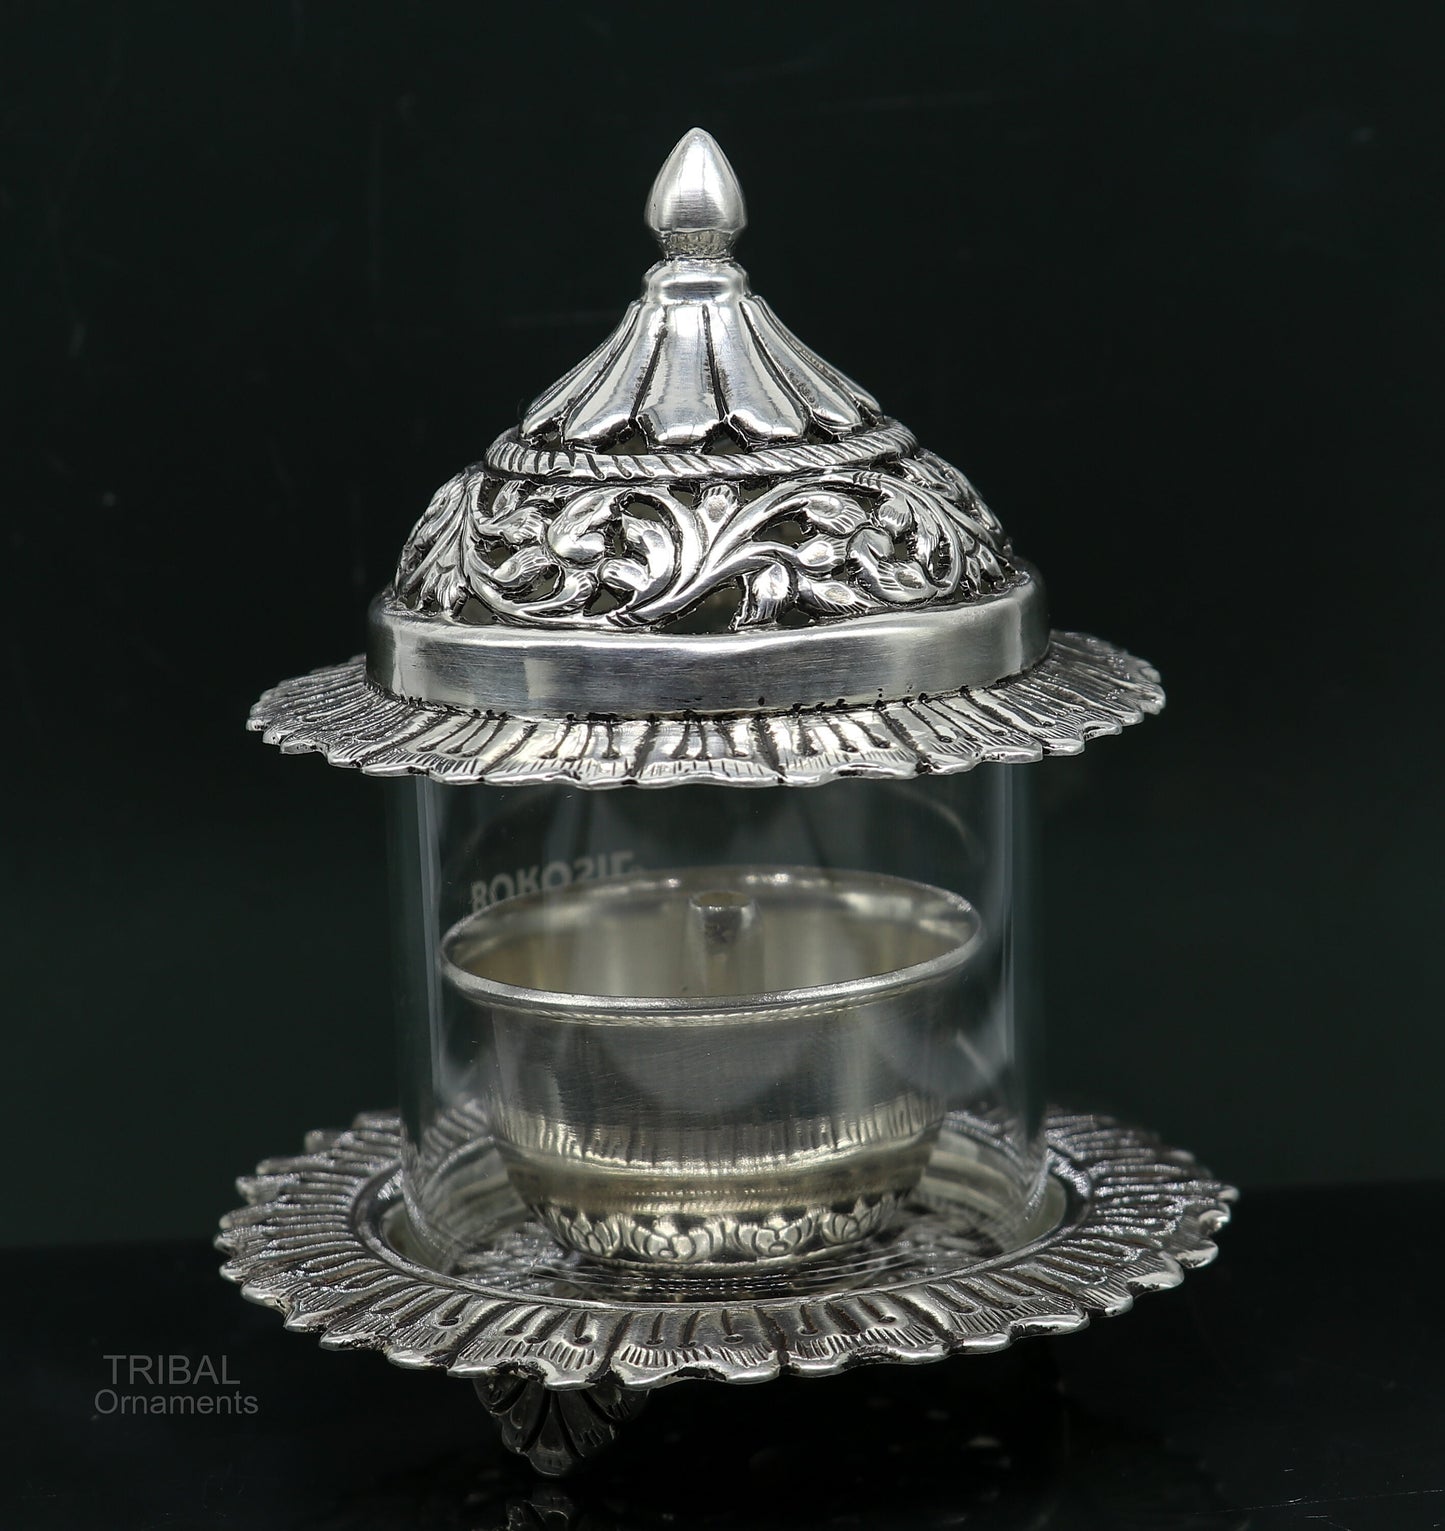 925 sterling silver handcrafted vintage design oil lamp/Deepak, silver article, puja utensils, silver figurine best decorative article su595 - TRIBAL ORNAMENTS